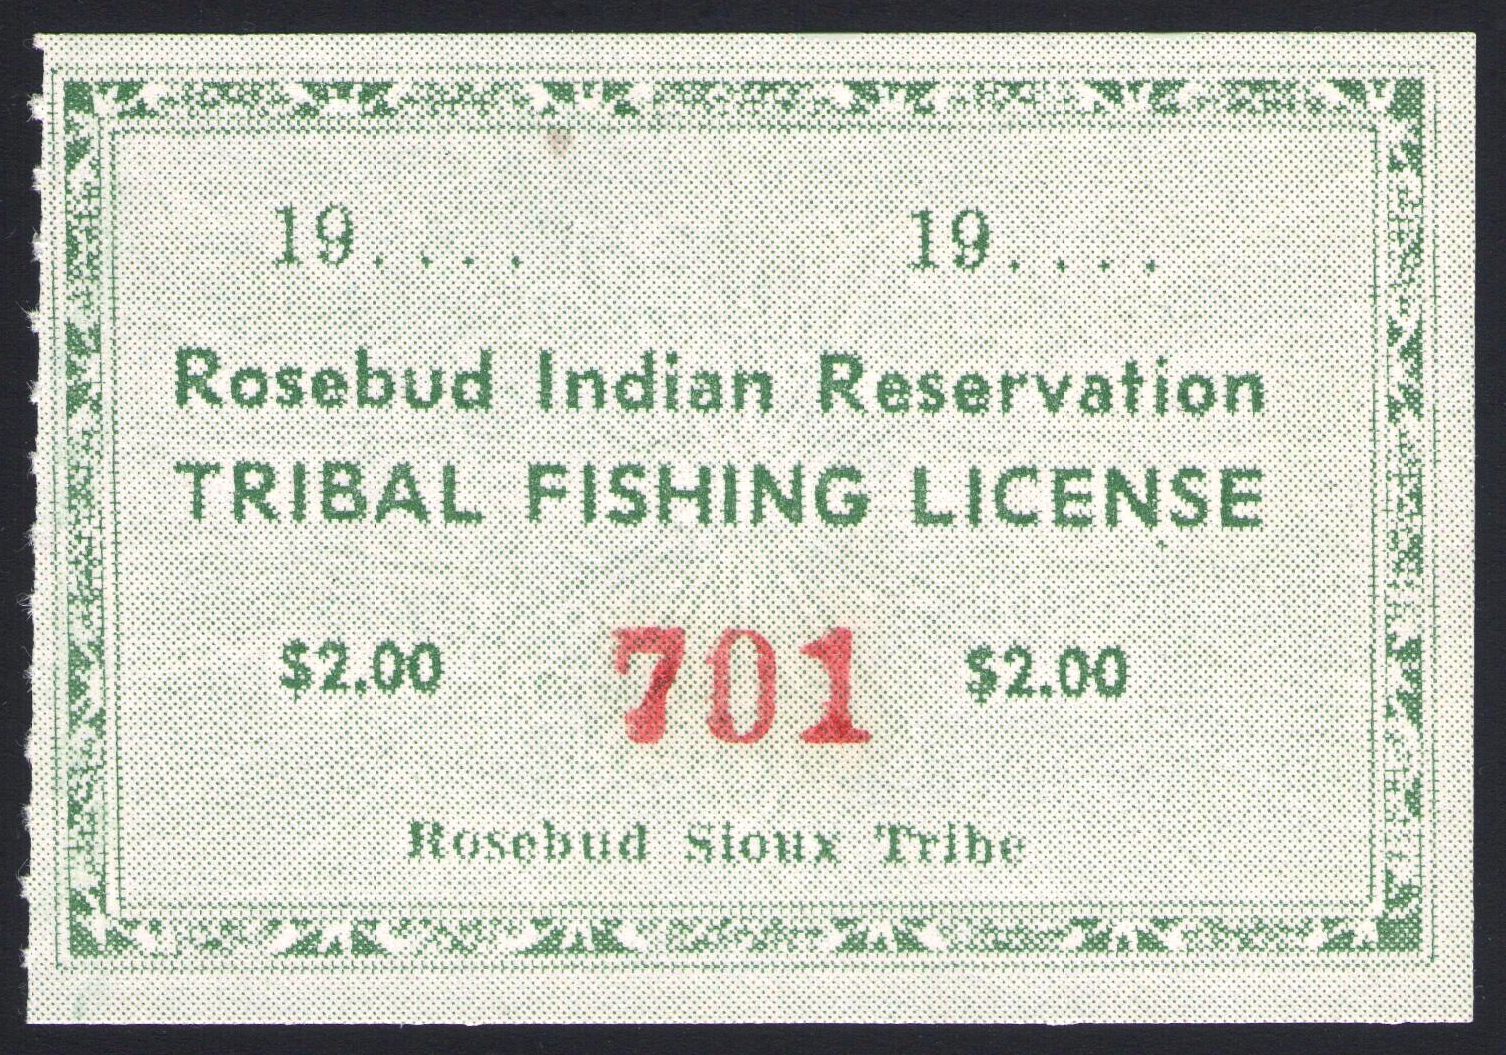 Type I 1959 Rosebud Trout